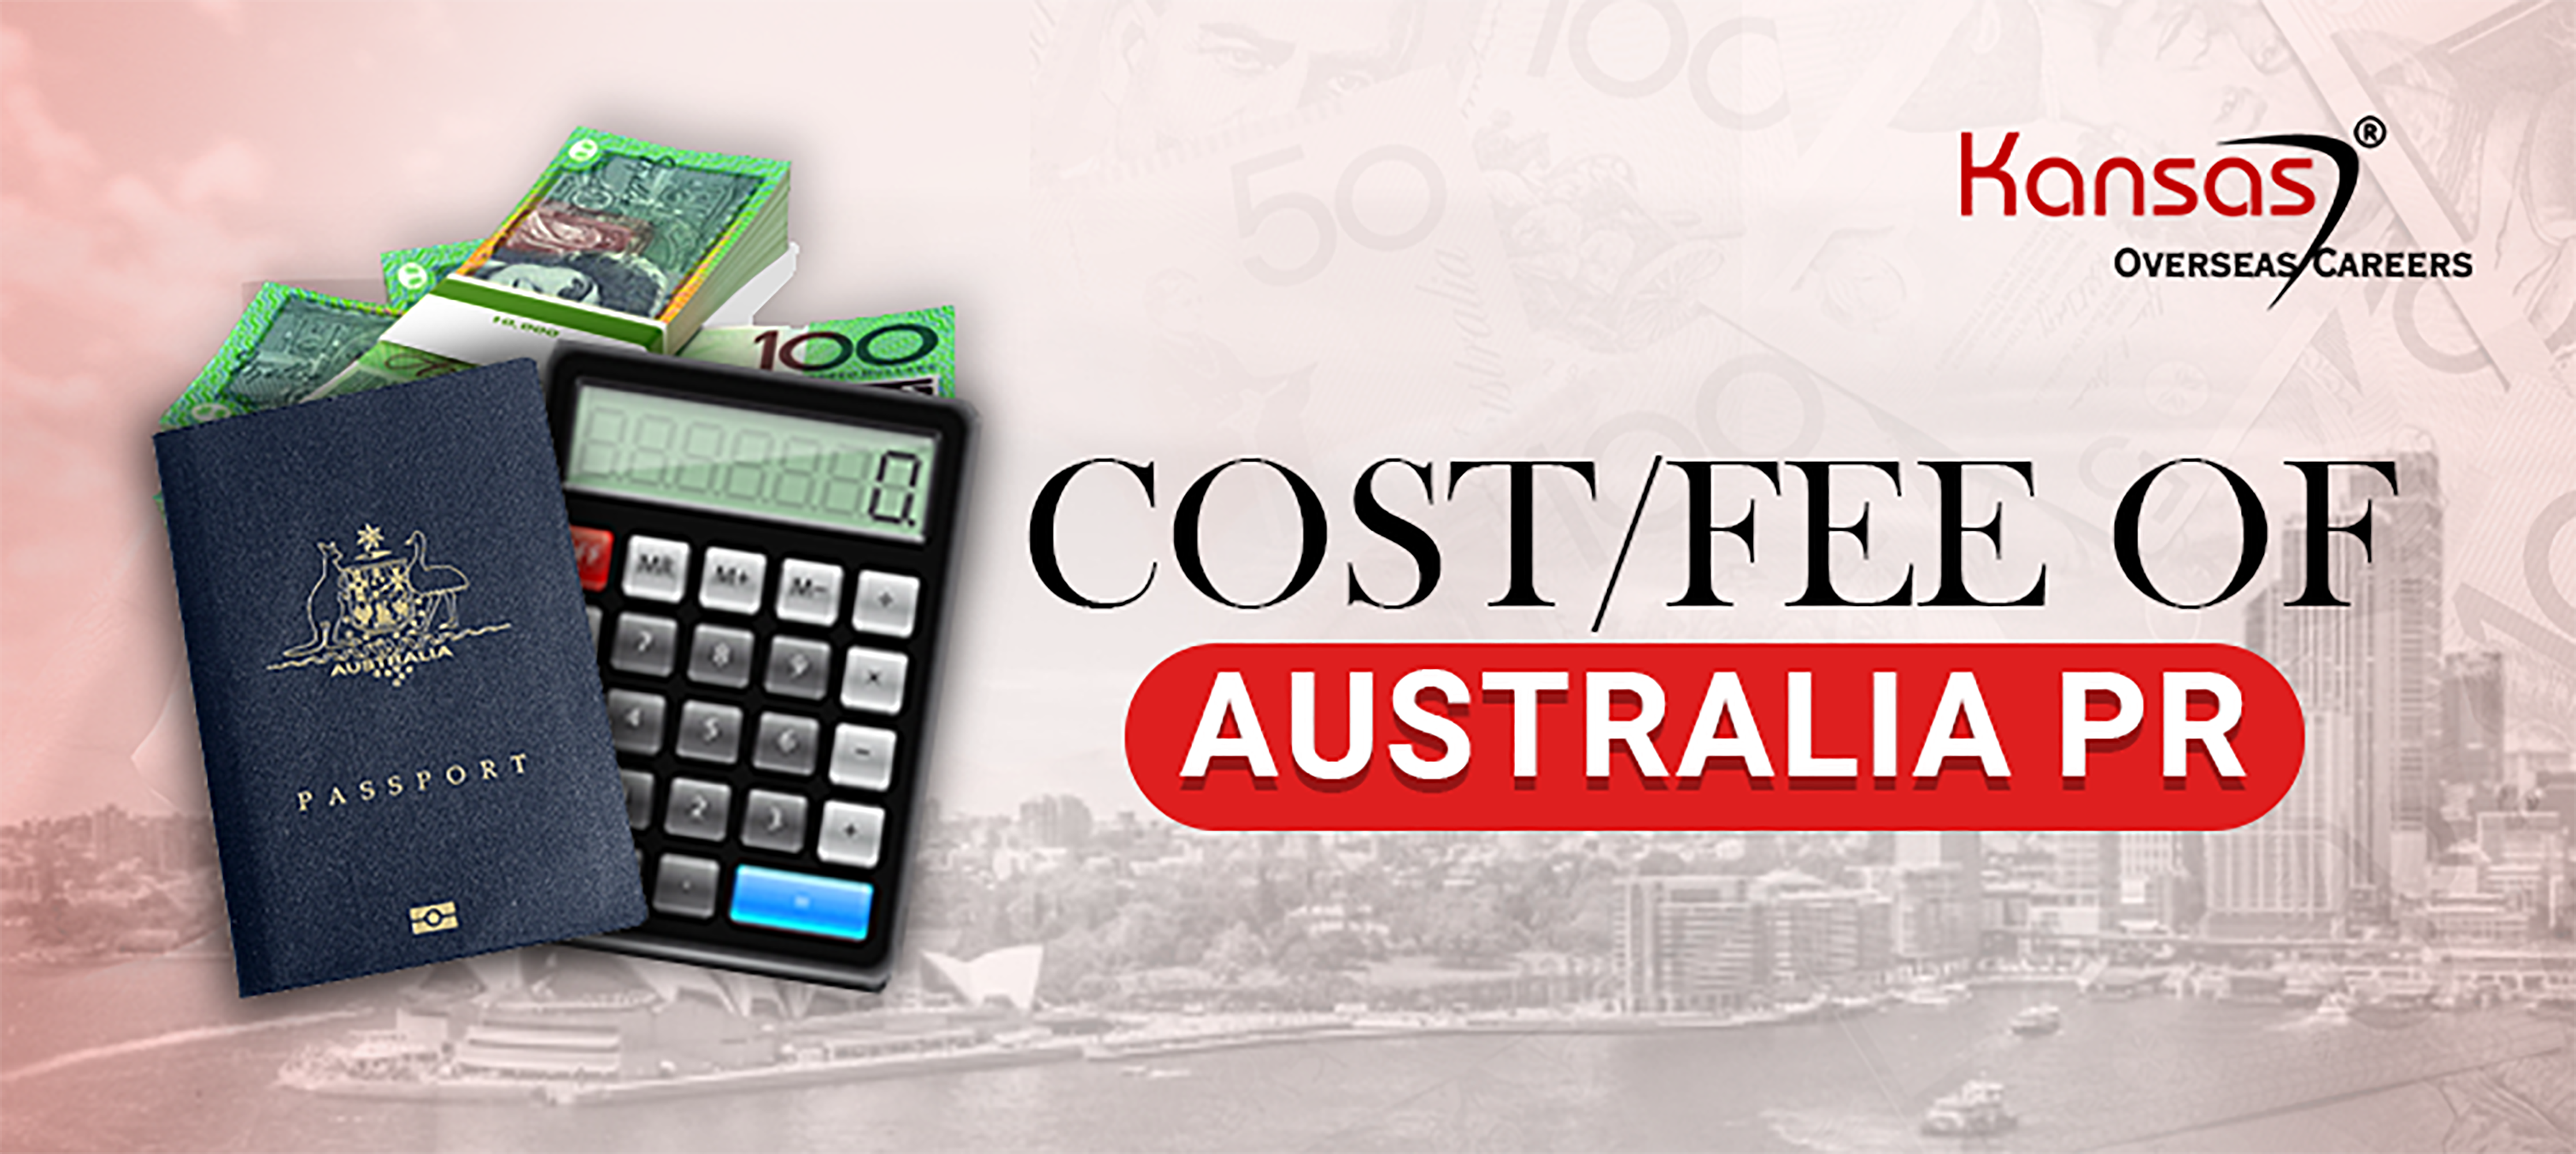 Cost Fee of Australia PR  04